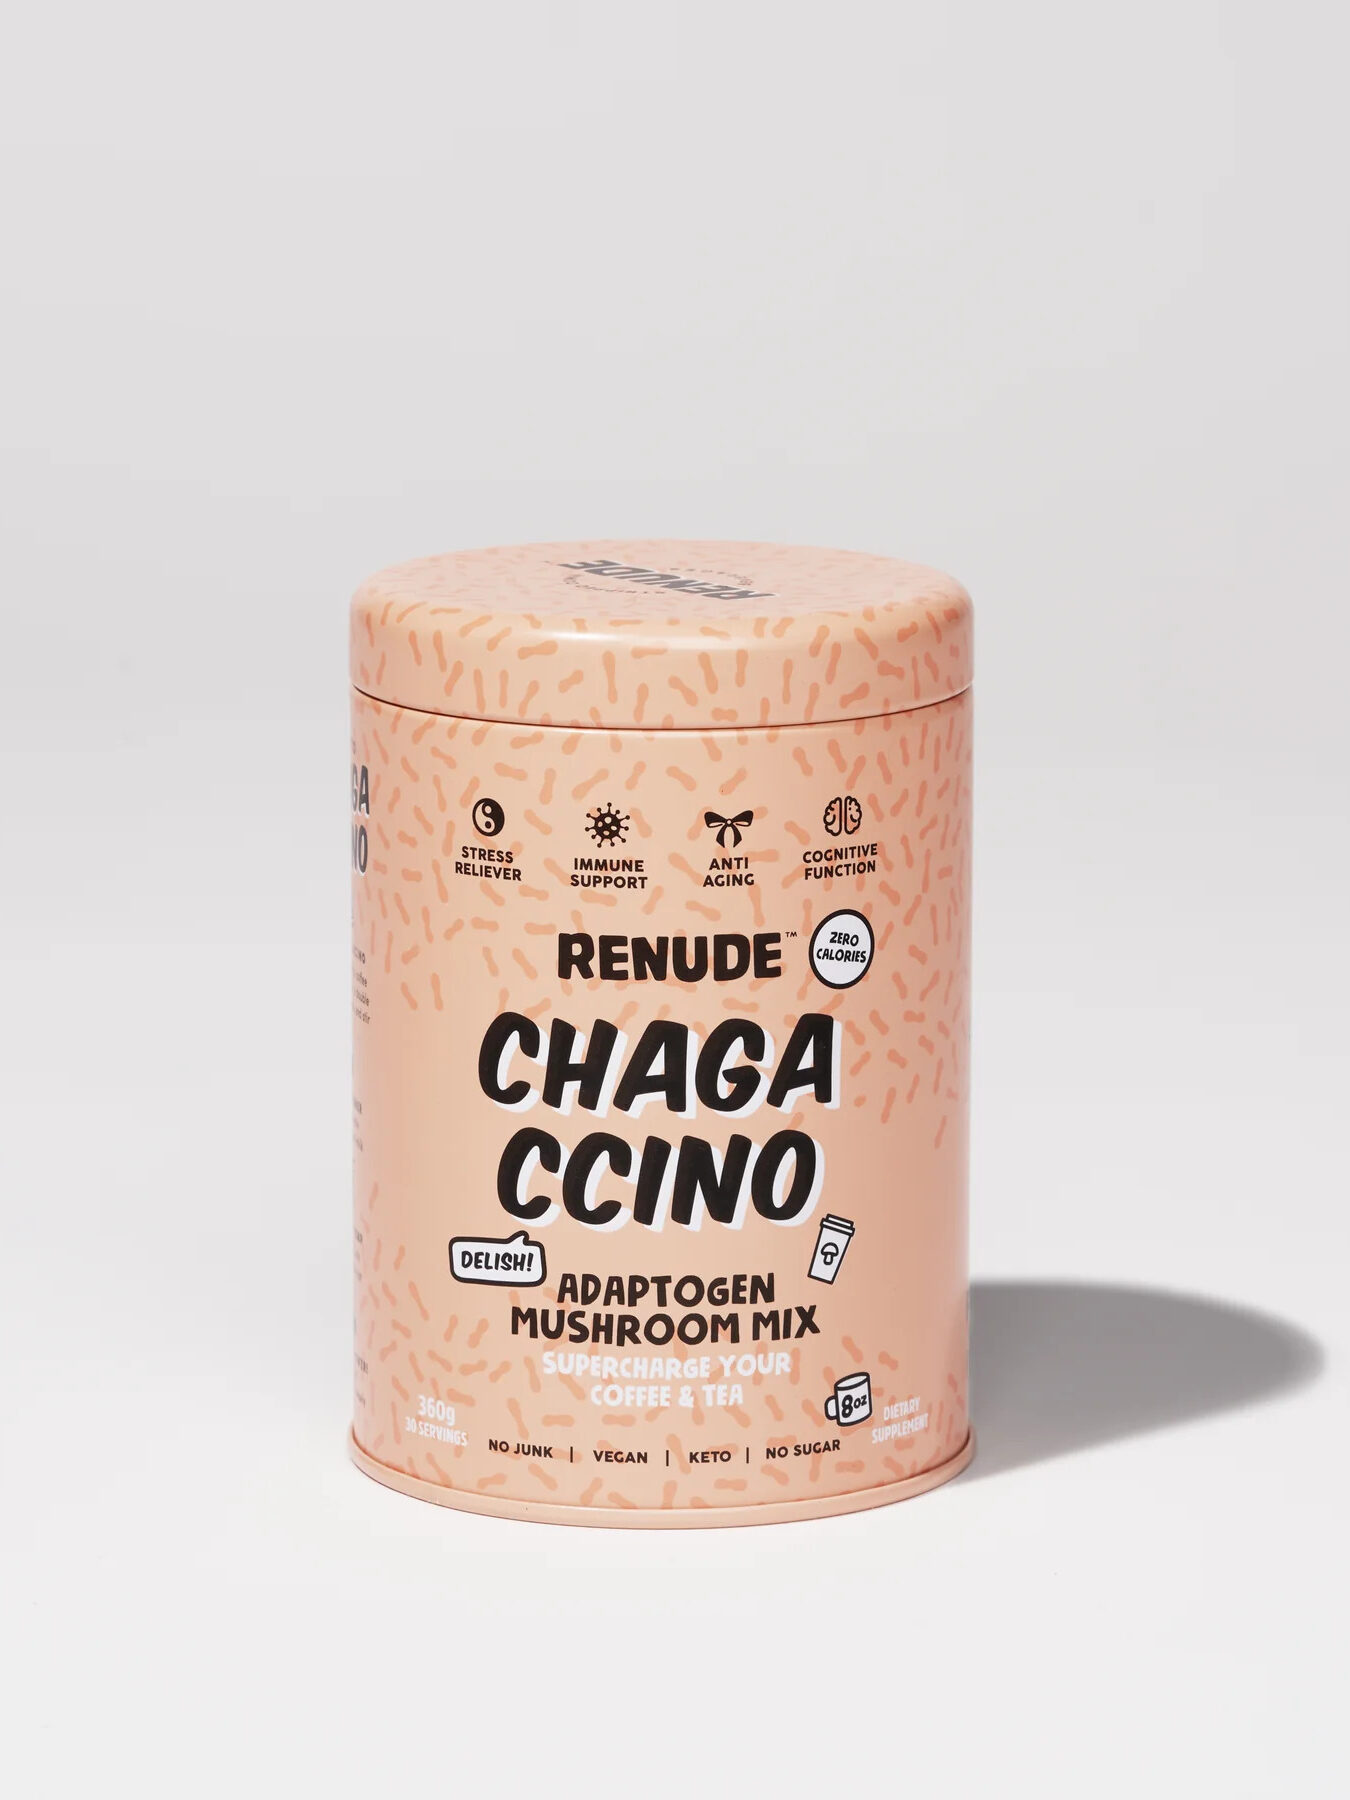 A container of Chagacinno coffee alternative.